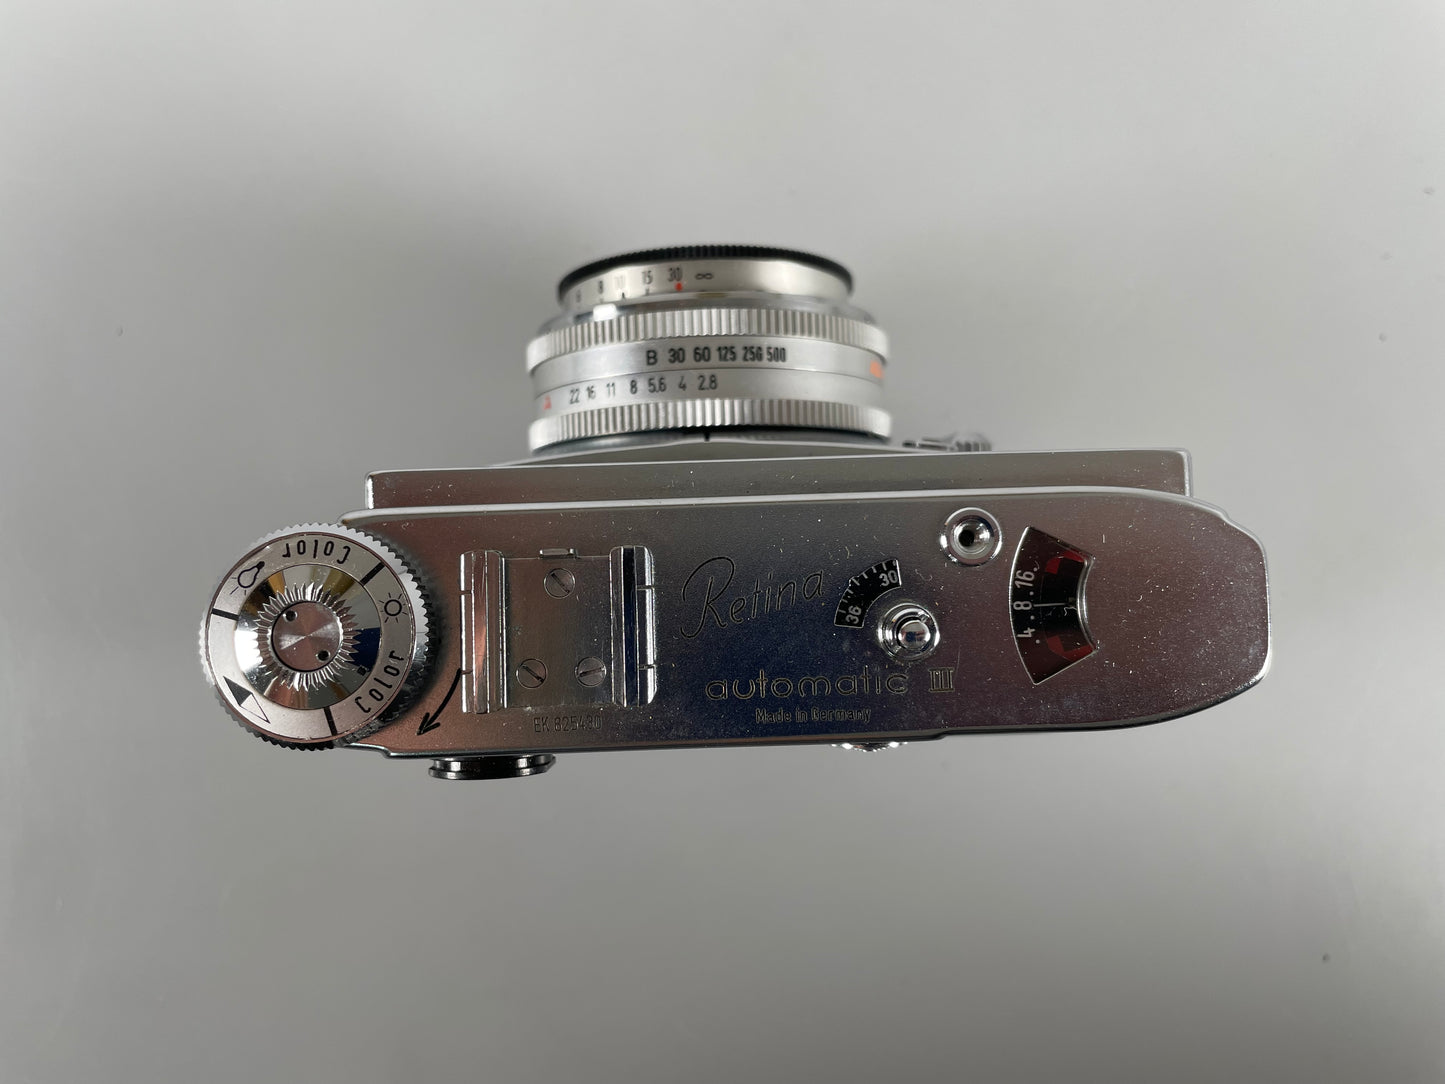 Kodak Retina Automatic III 35mm Film Camera with xenar 45mm f2.8 Lens